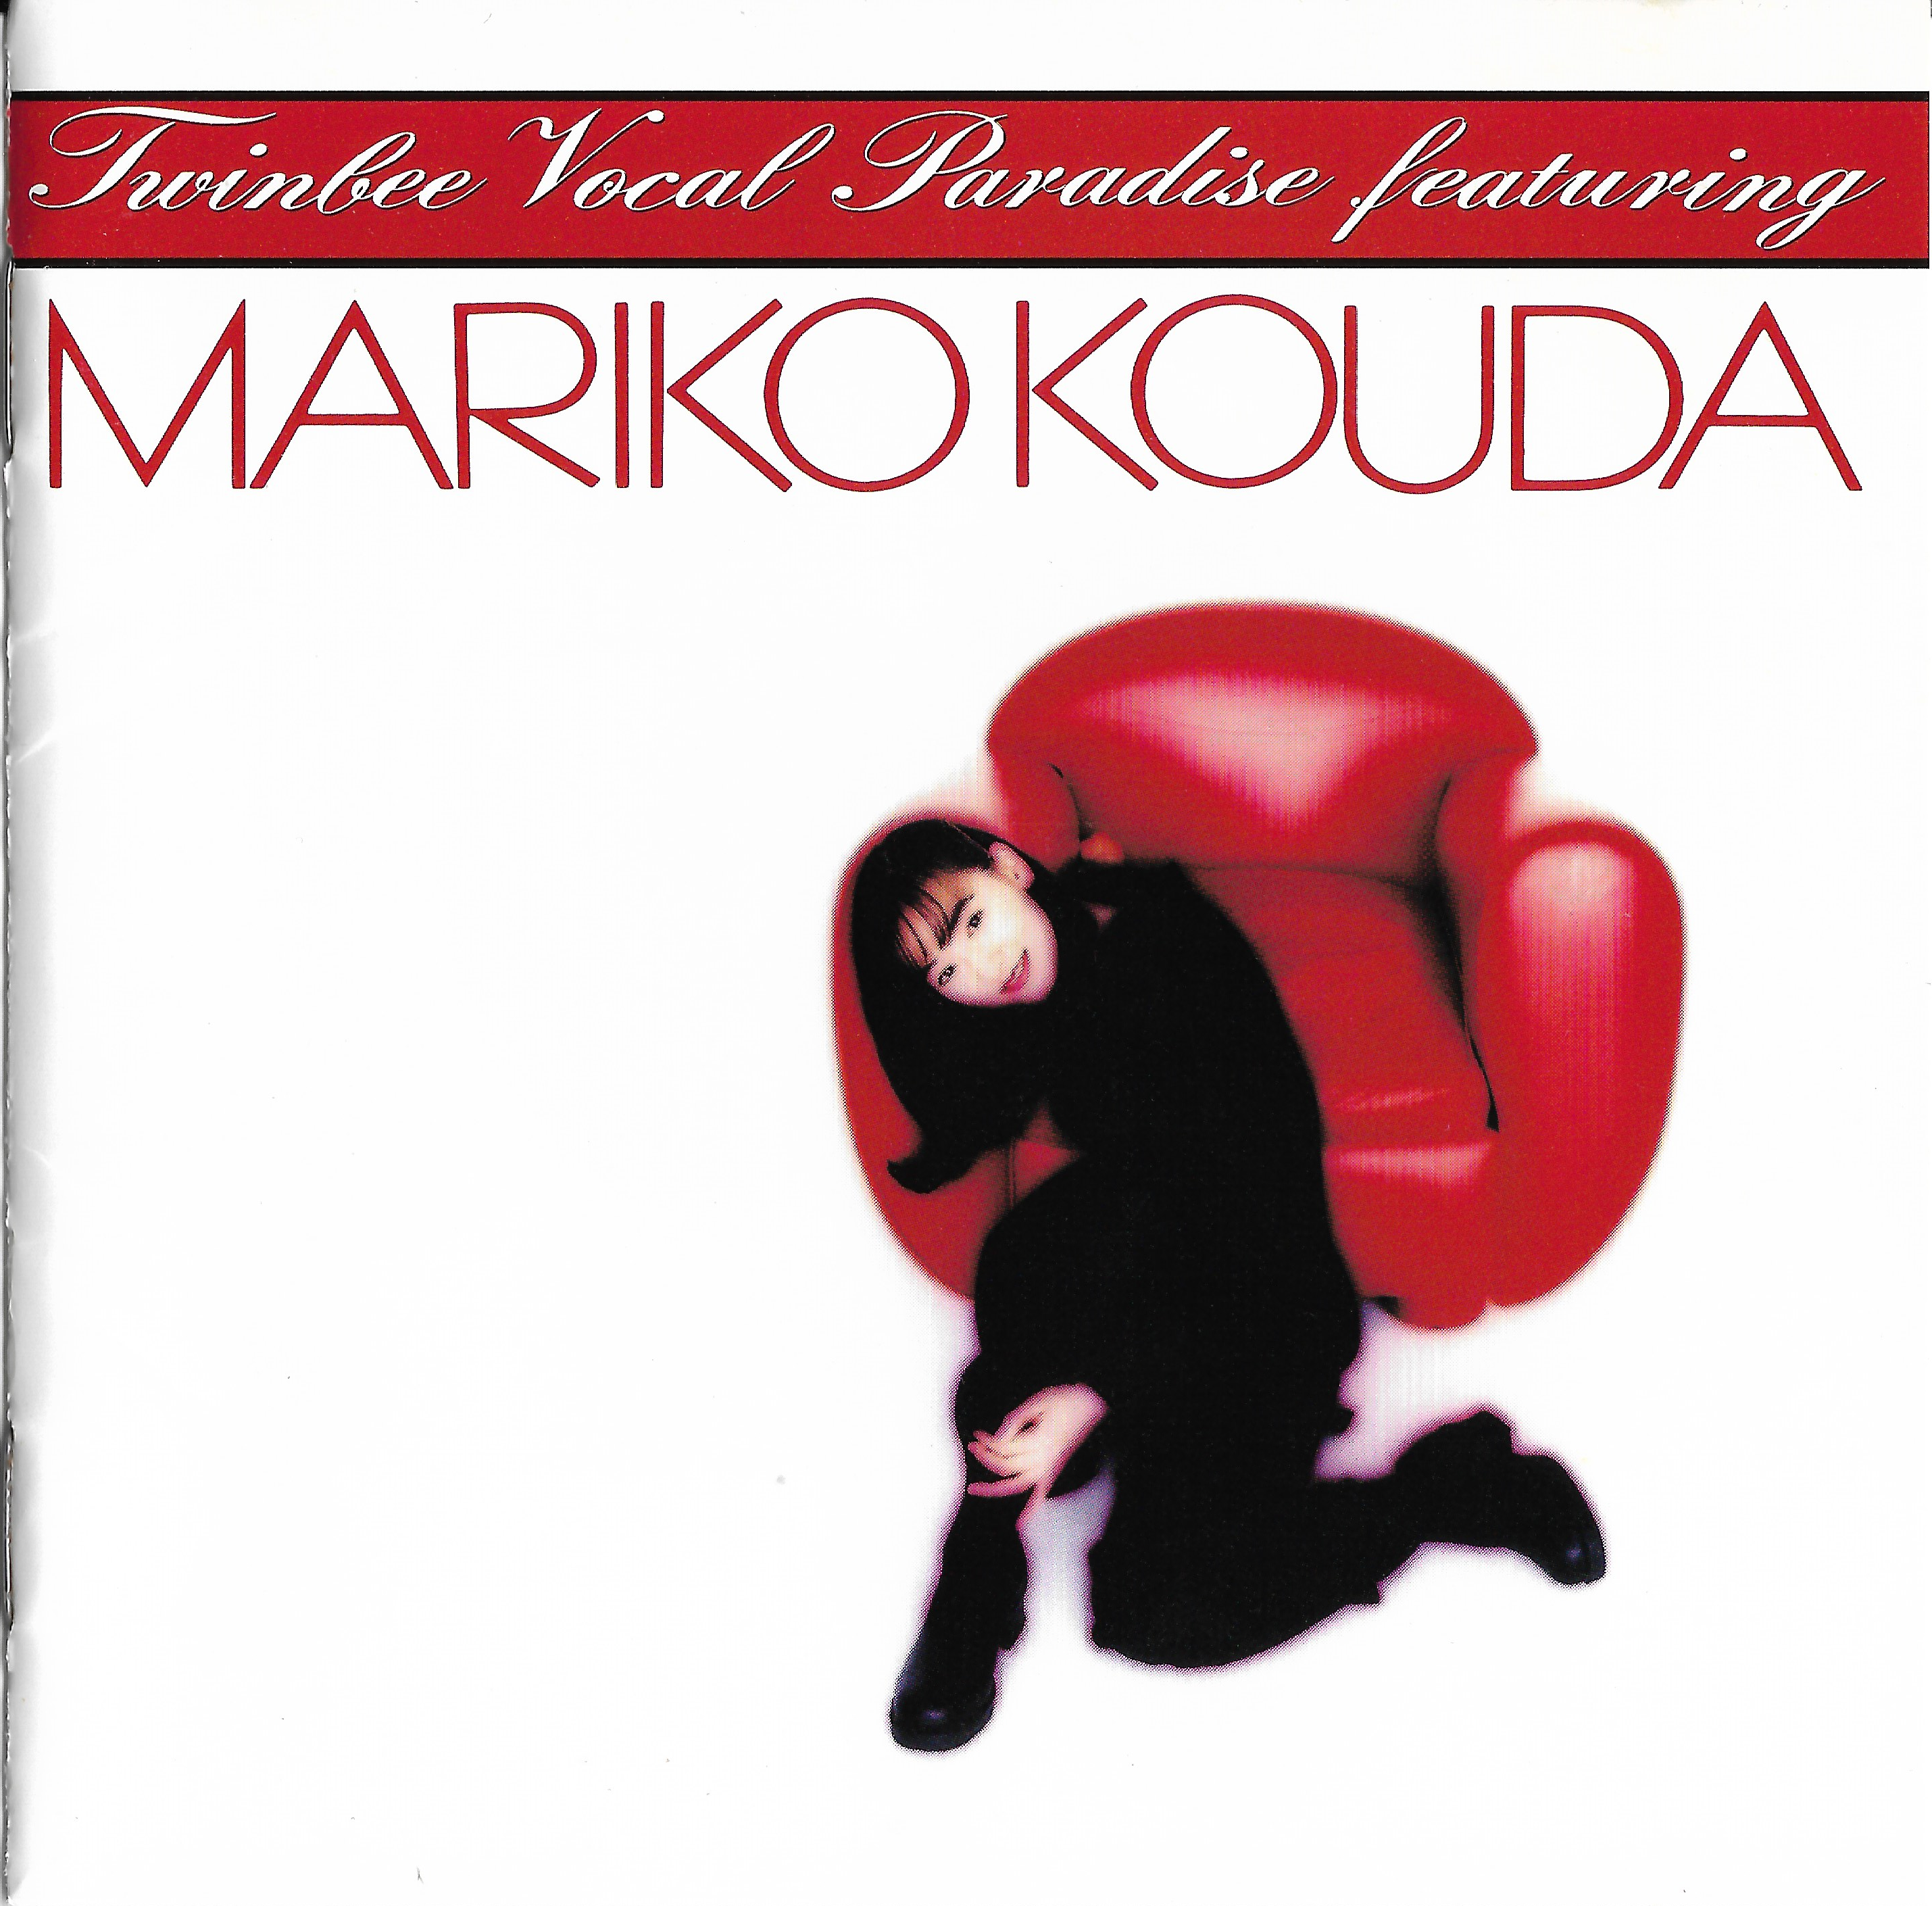 Twinbee Vocal Paradise featuring Mariko Kouda | TwinBee Wiki | Fandom